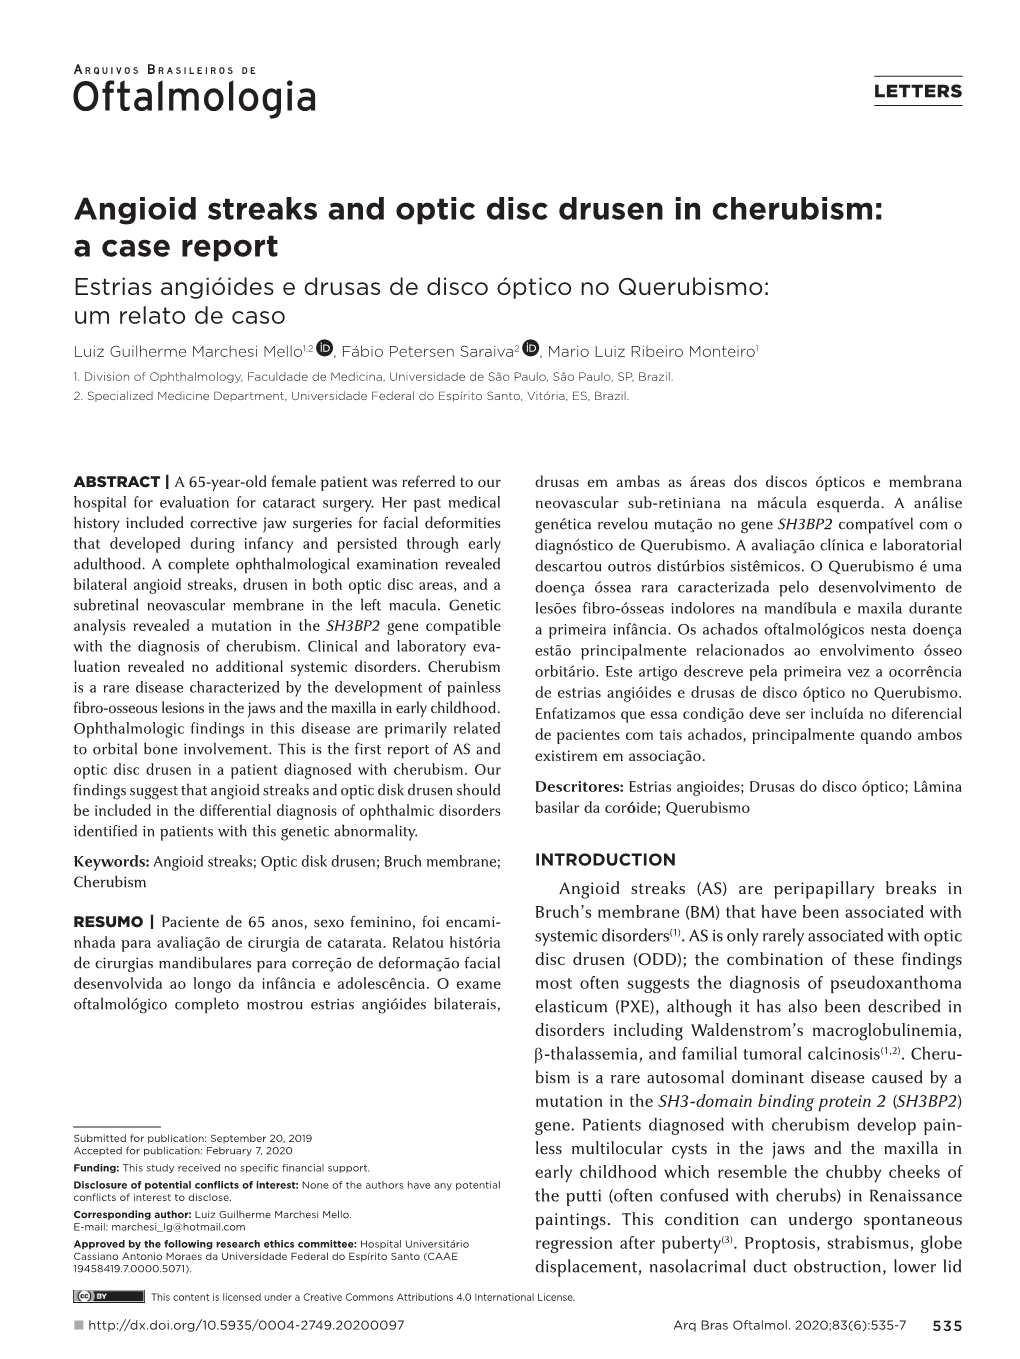 Angioid Streaks and Optic Disc Drusen in Cherubism